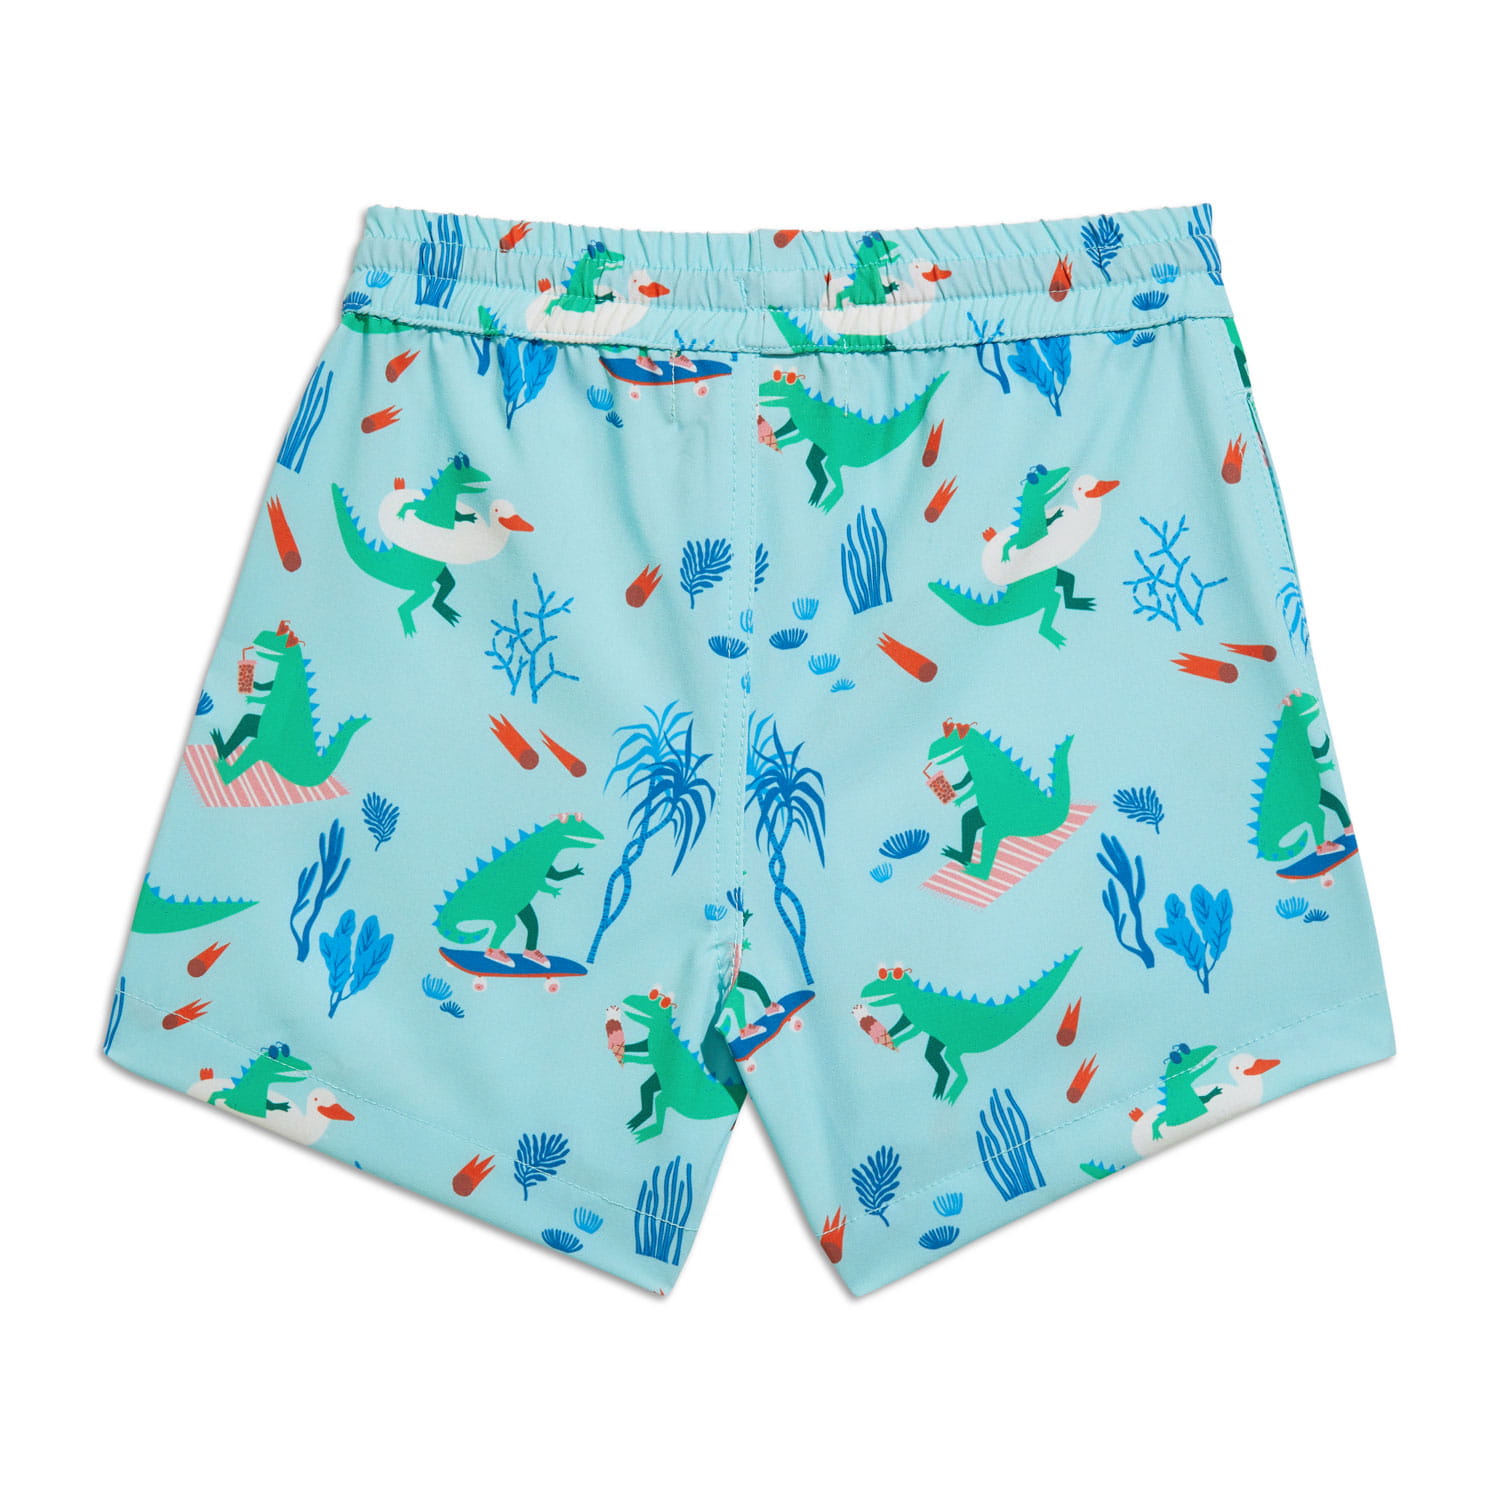 Oasis Dinosaurs Swimsuit by Yellow Jungle - Designer swimwear for kids